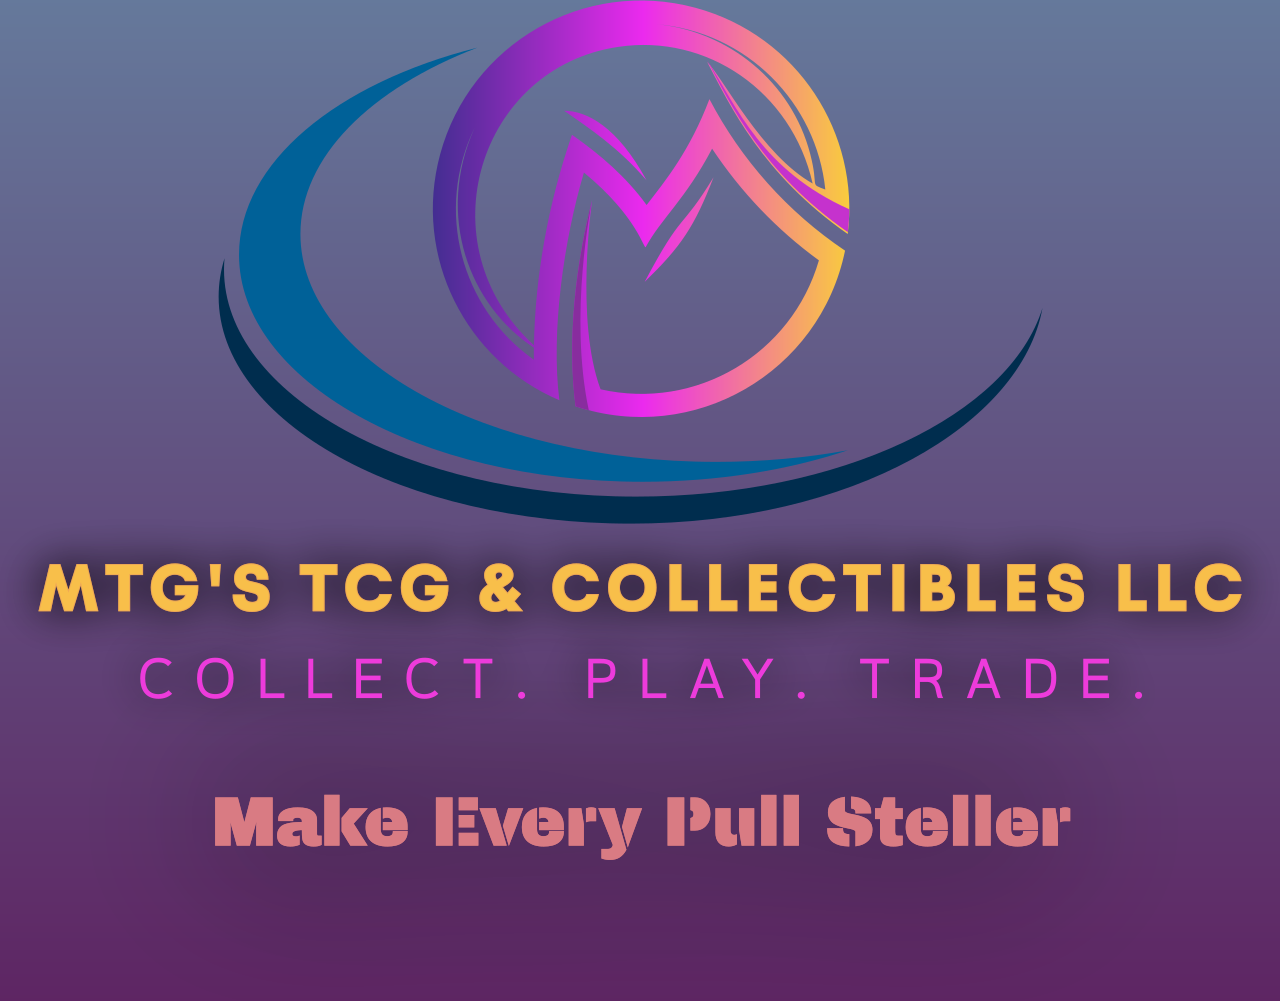 MTG's TCG & Collectibles LLC's logo